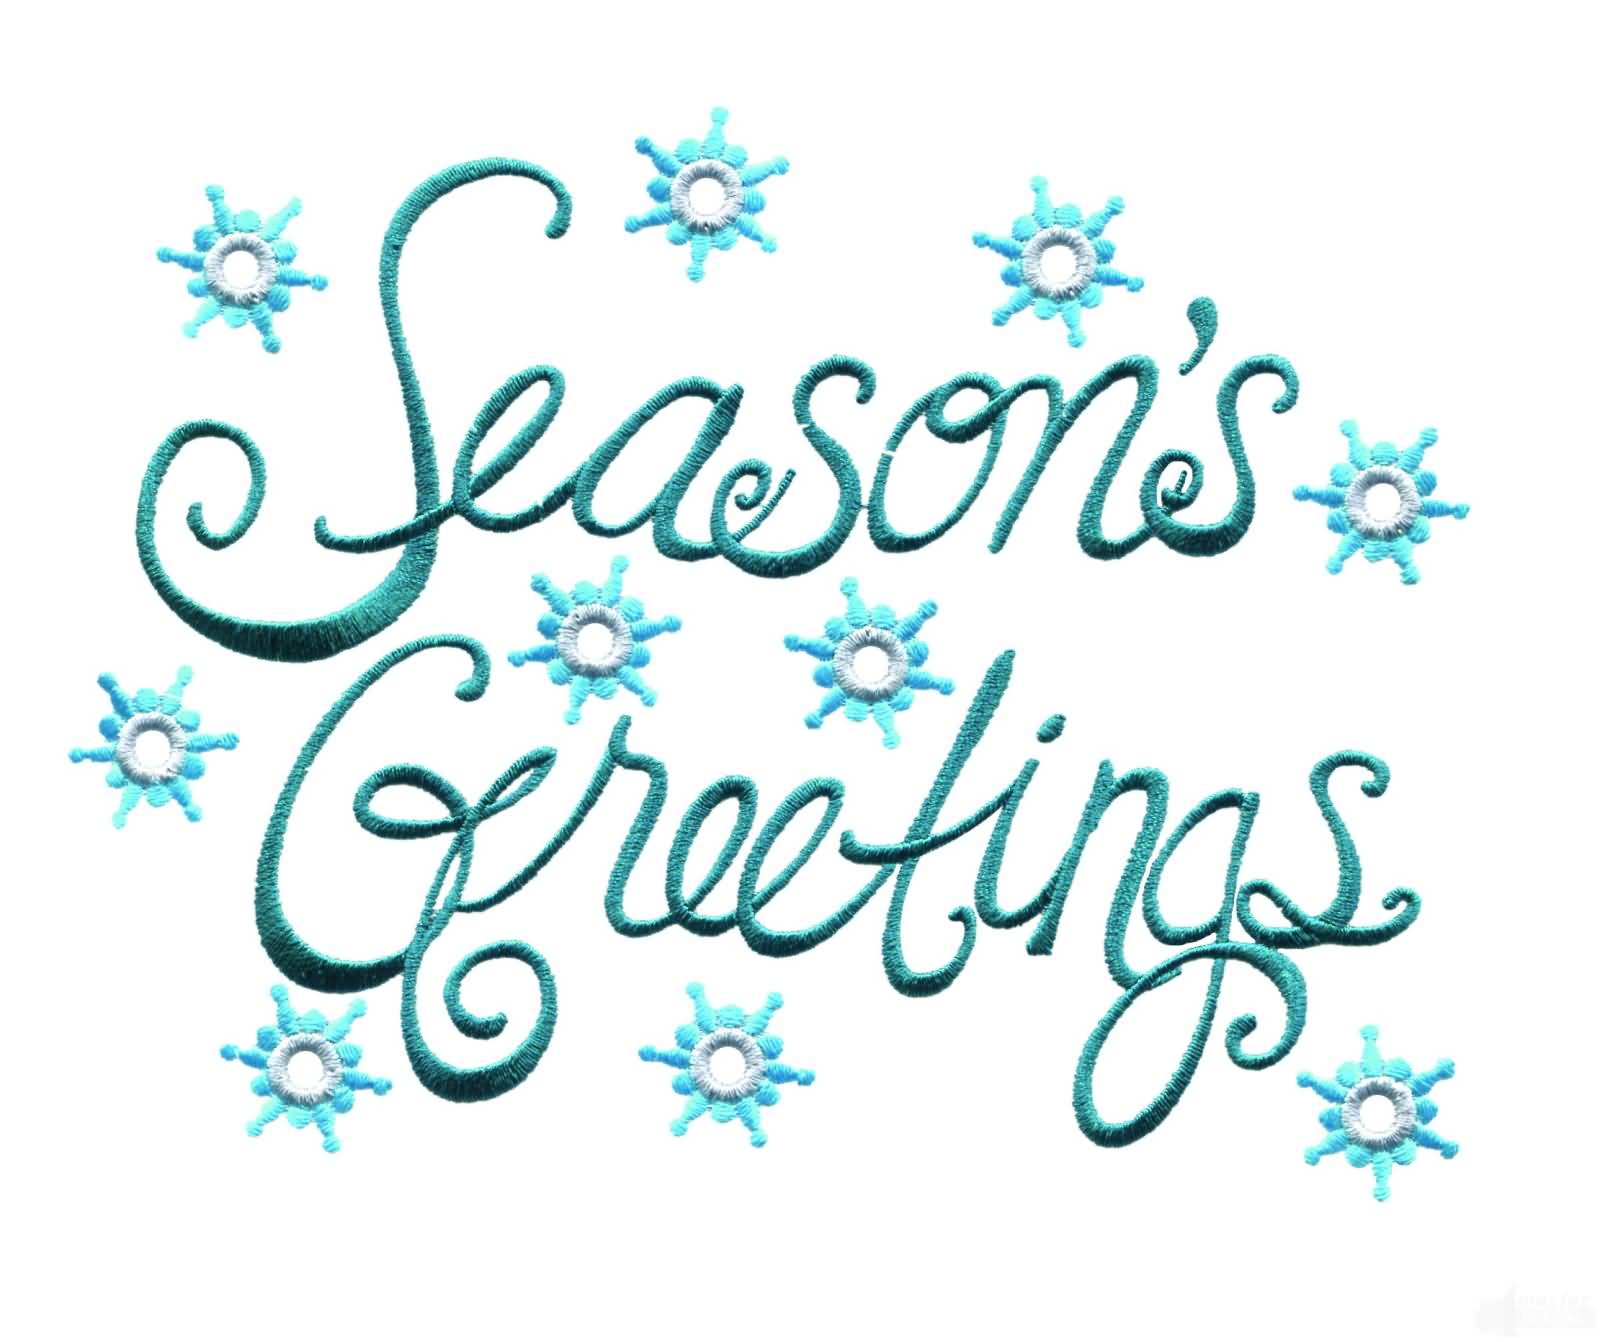 Free Seasons Greetings Cliparts, Download Free Clip Art